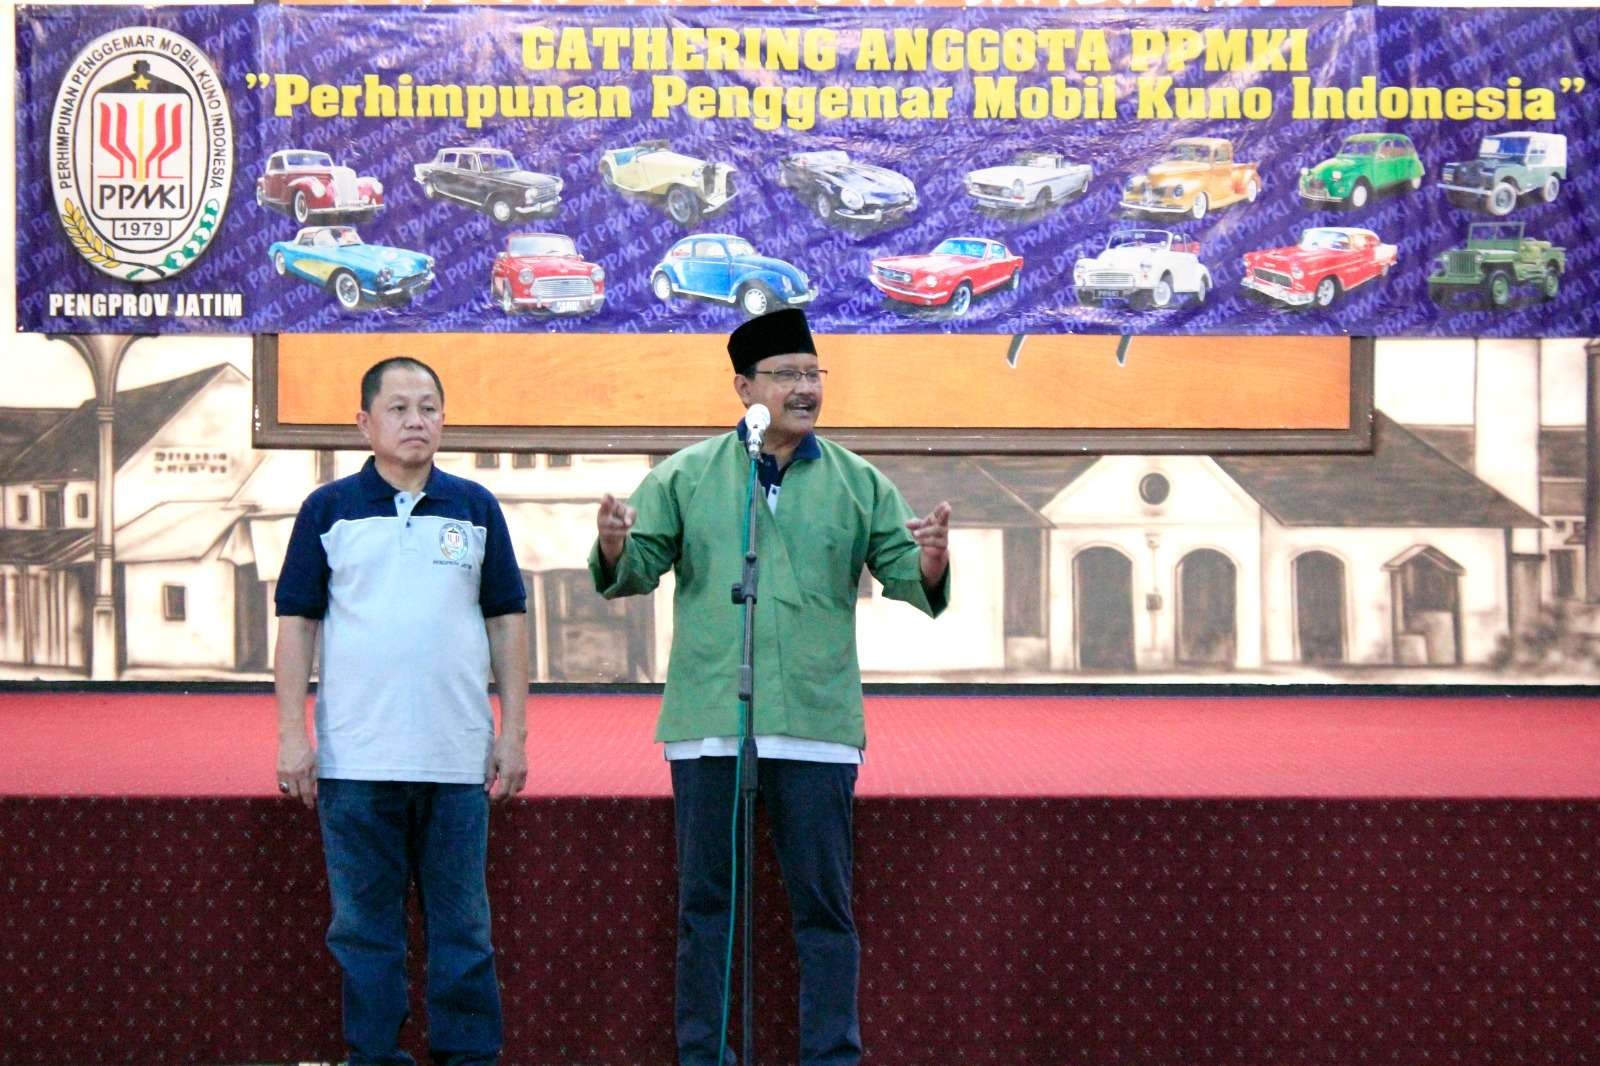 Walikota Pasuruan Saifullah Yusuf menyambut kedatangan gatering Perhimpunan Penggemar Mobil Kuni Jawa Timur. (Foto: Dok Kota Pasuruan)